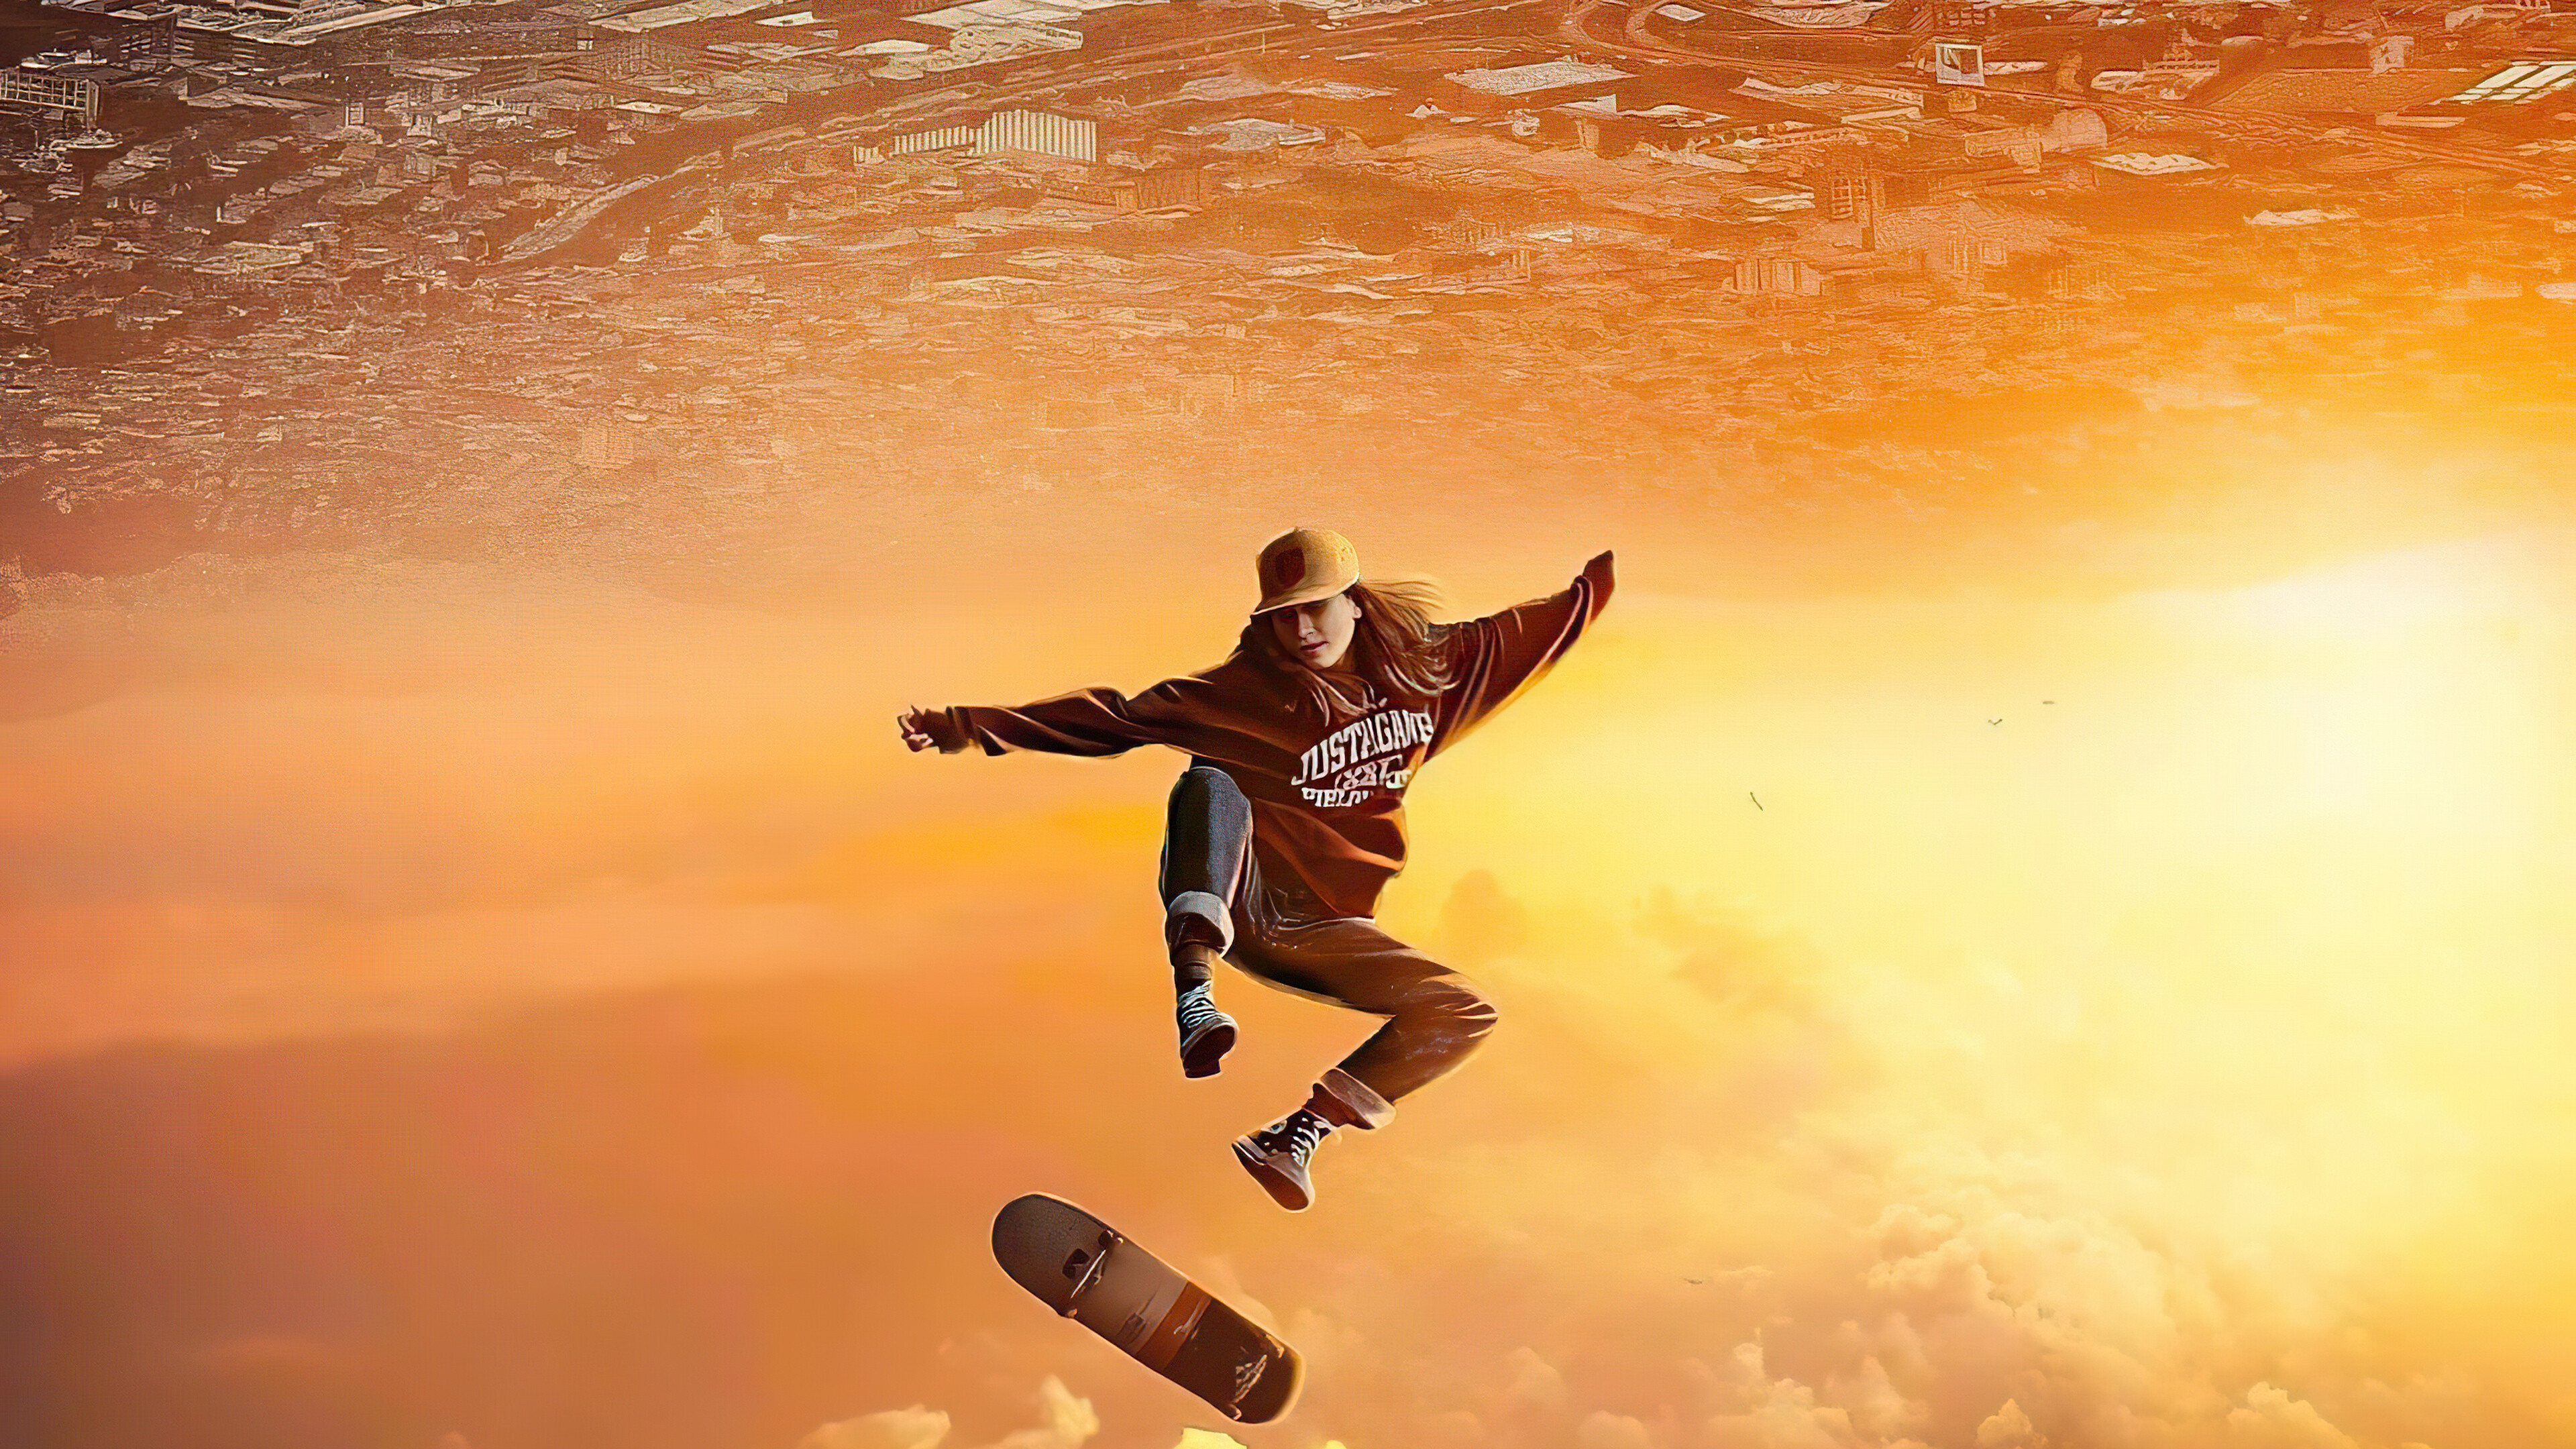 Girl Skateboarding: Skater, Freestyle maneuvers, A skateboarder in mid-flight performing a trick. 3840x2160 4K Wallpaper.